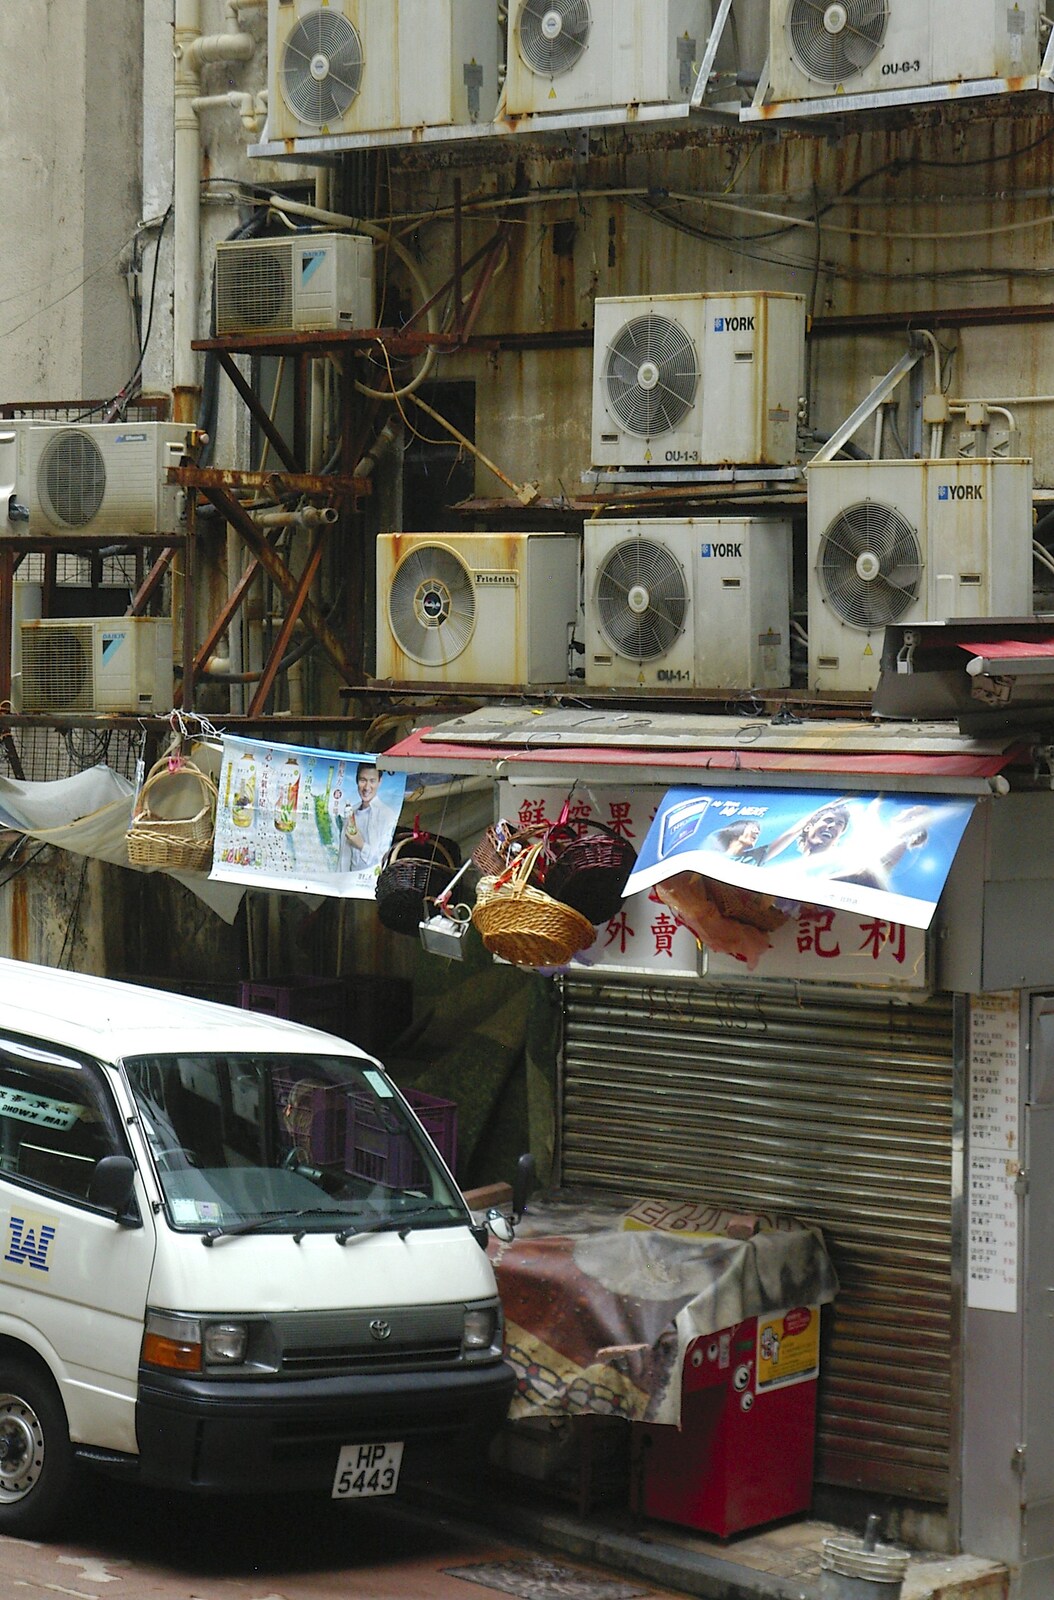 A ton of air conditioning units from Wan Chai and Central, Hong Kong, China - 2nd October 2006